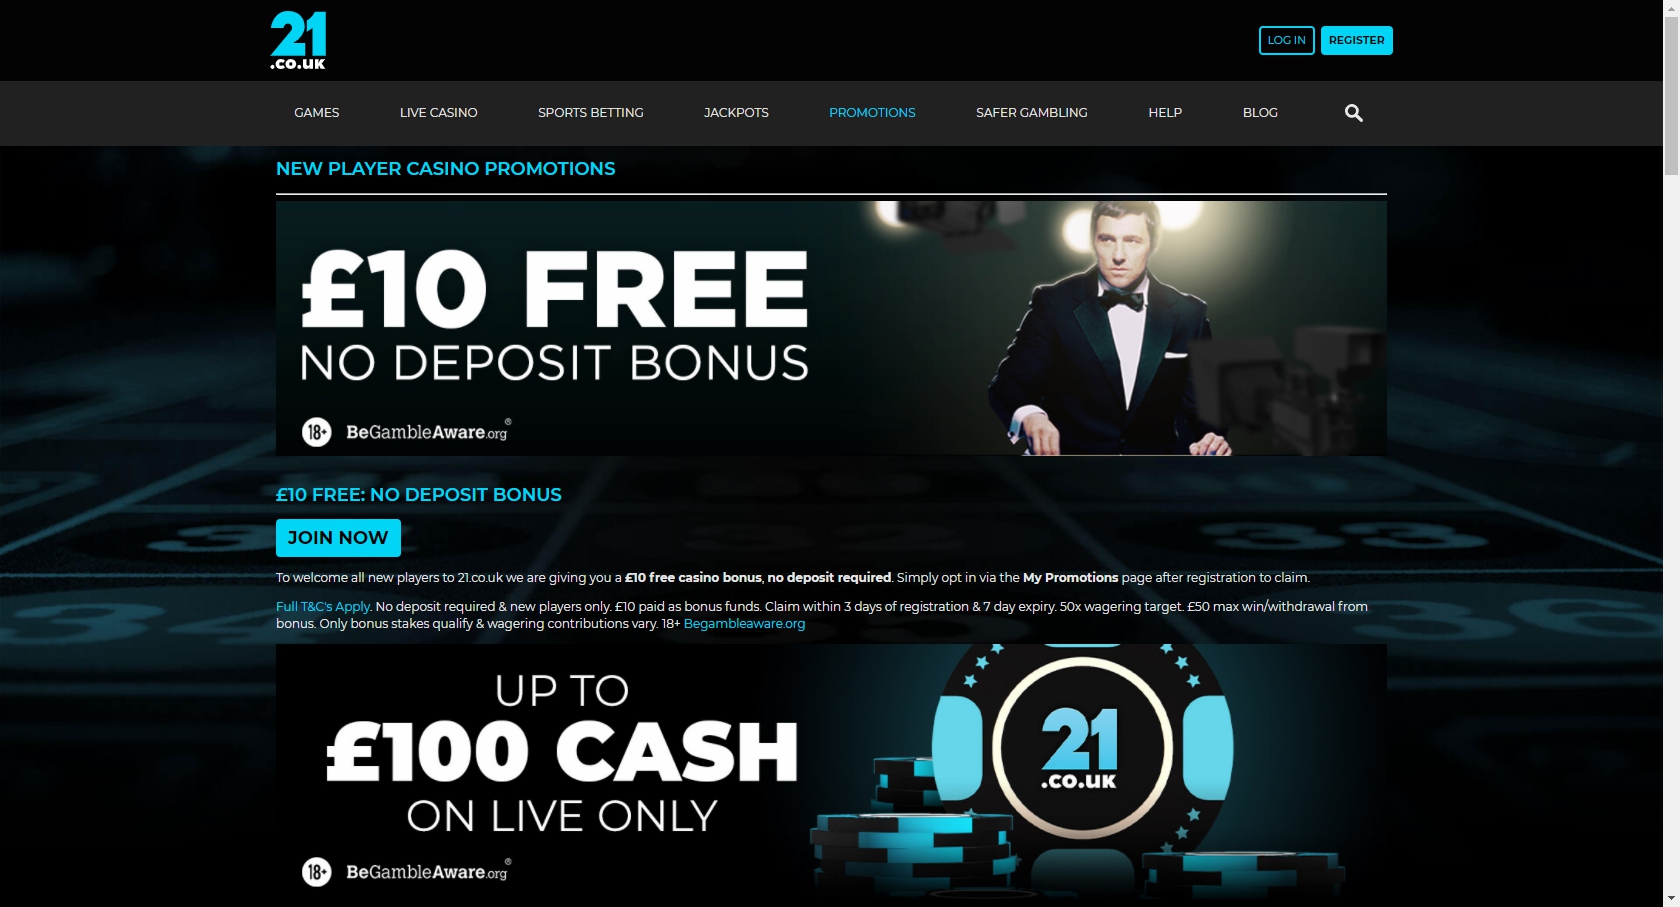 21.co.uk Casino No Deposit Bonus